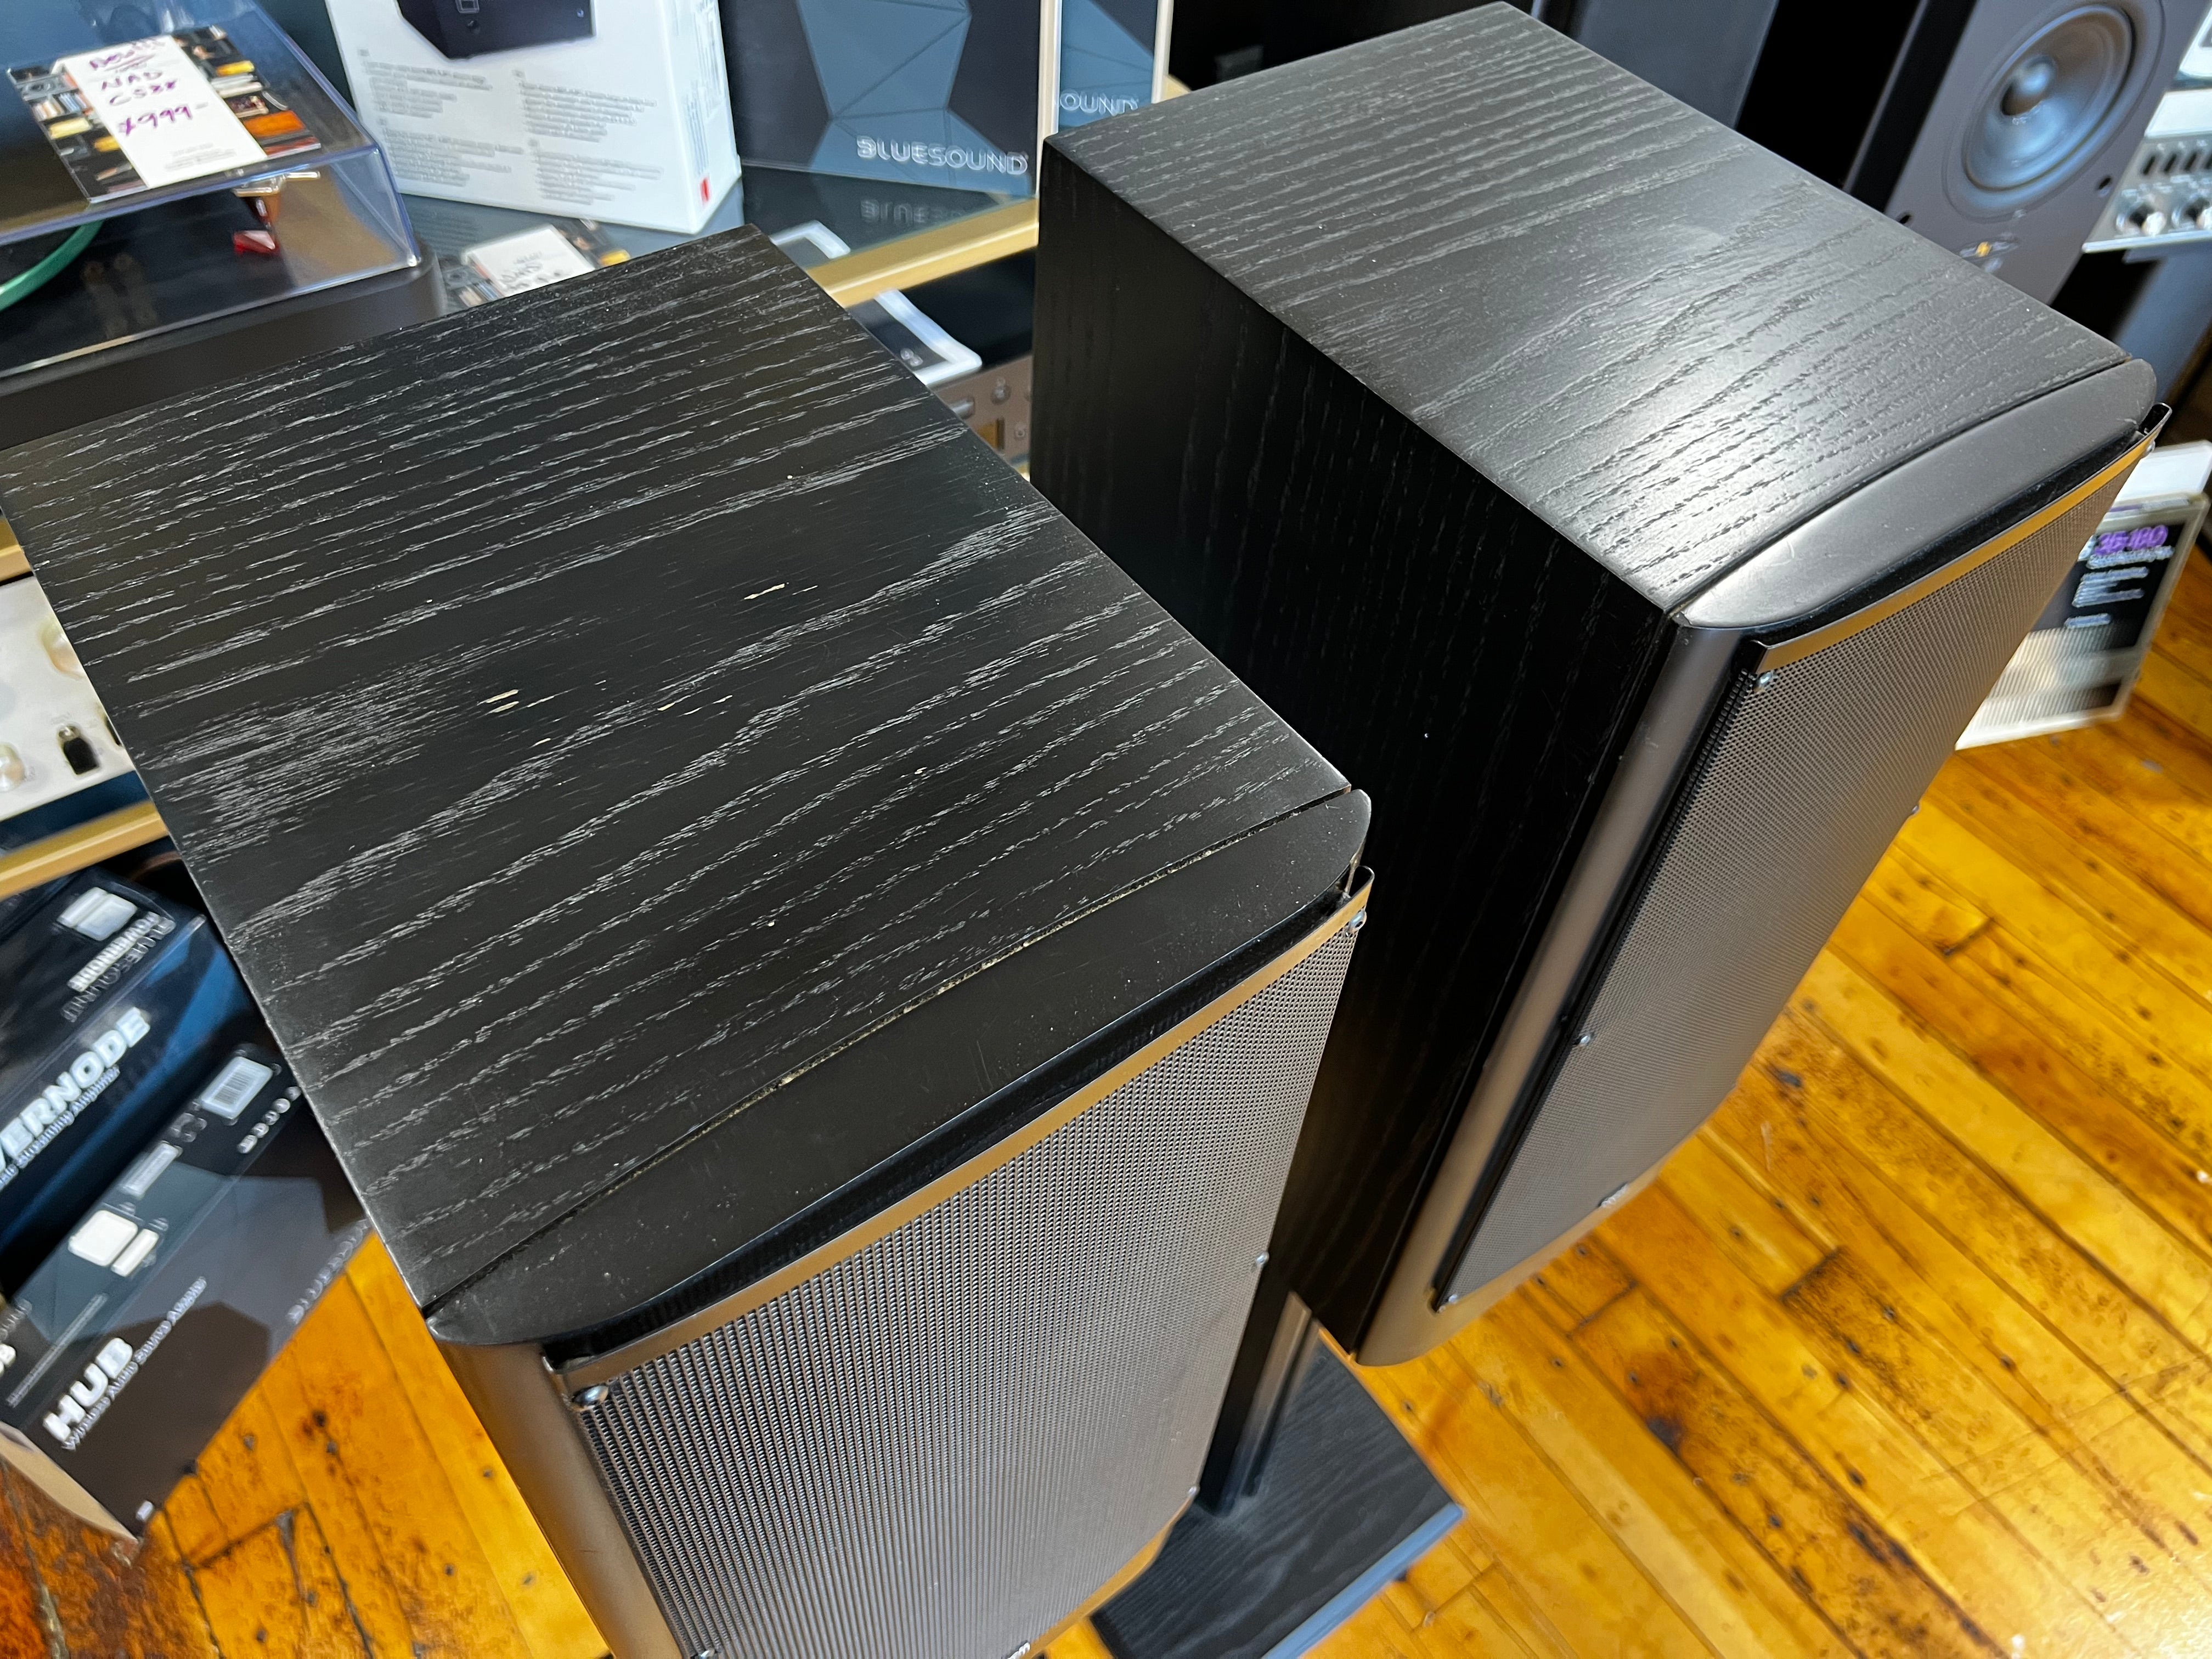 Snell Acoustics Type K.5 MkII Bookshelf Speakers